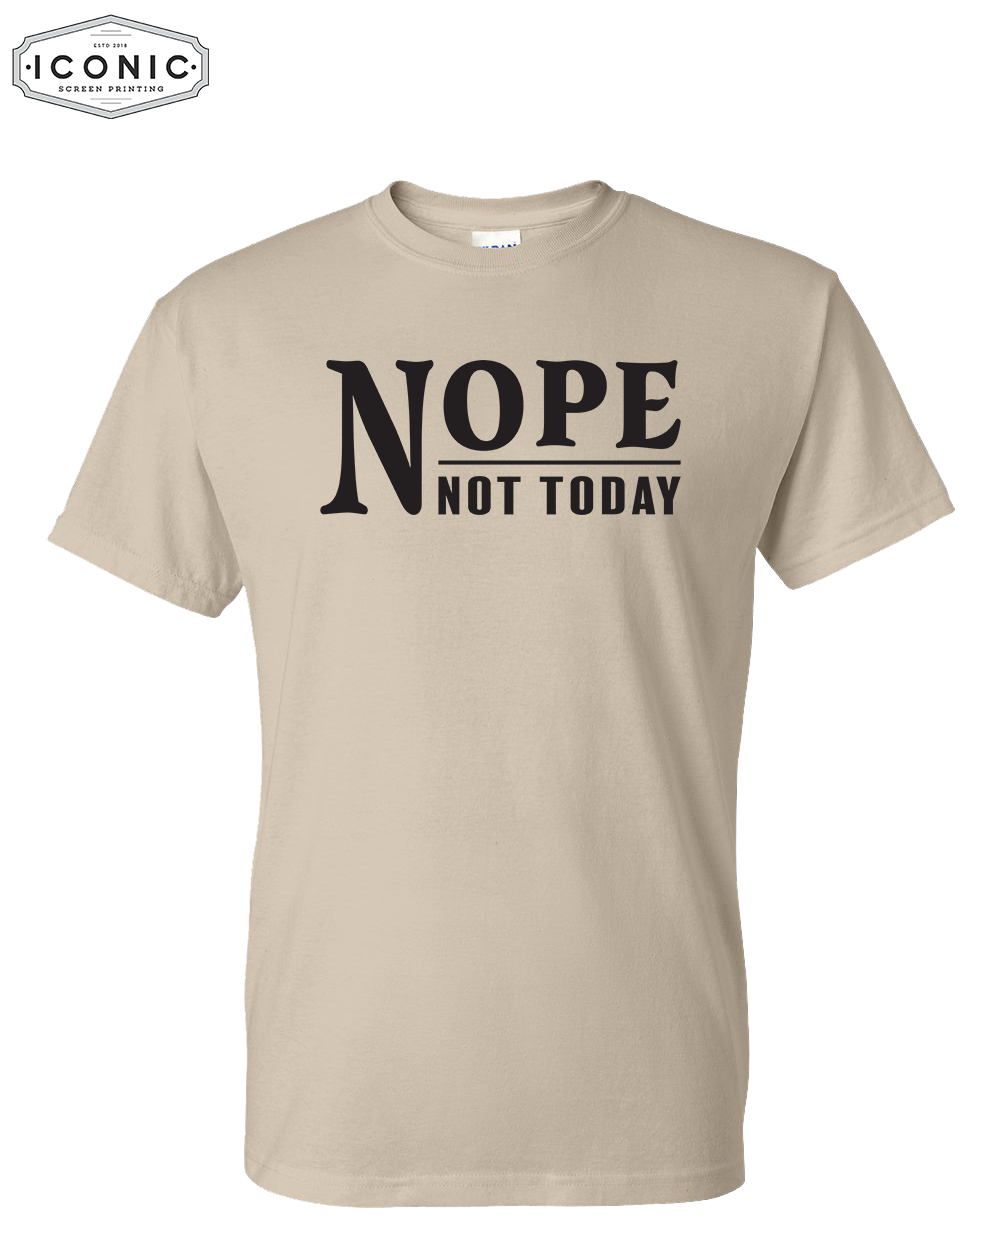 Nope Not Today - DryBlend T-Shirt